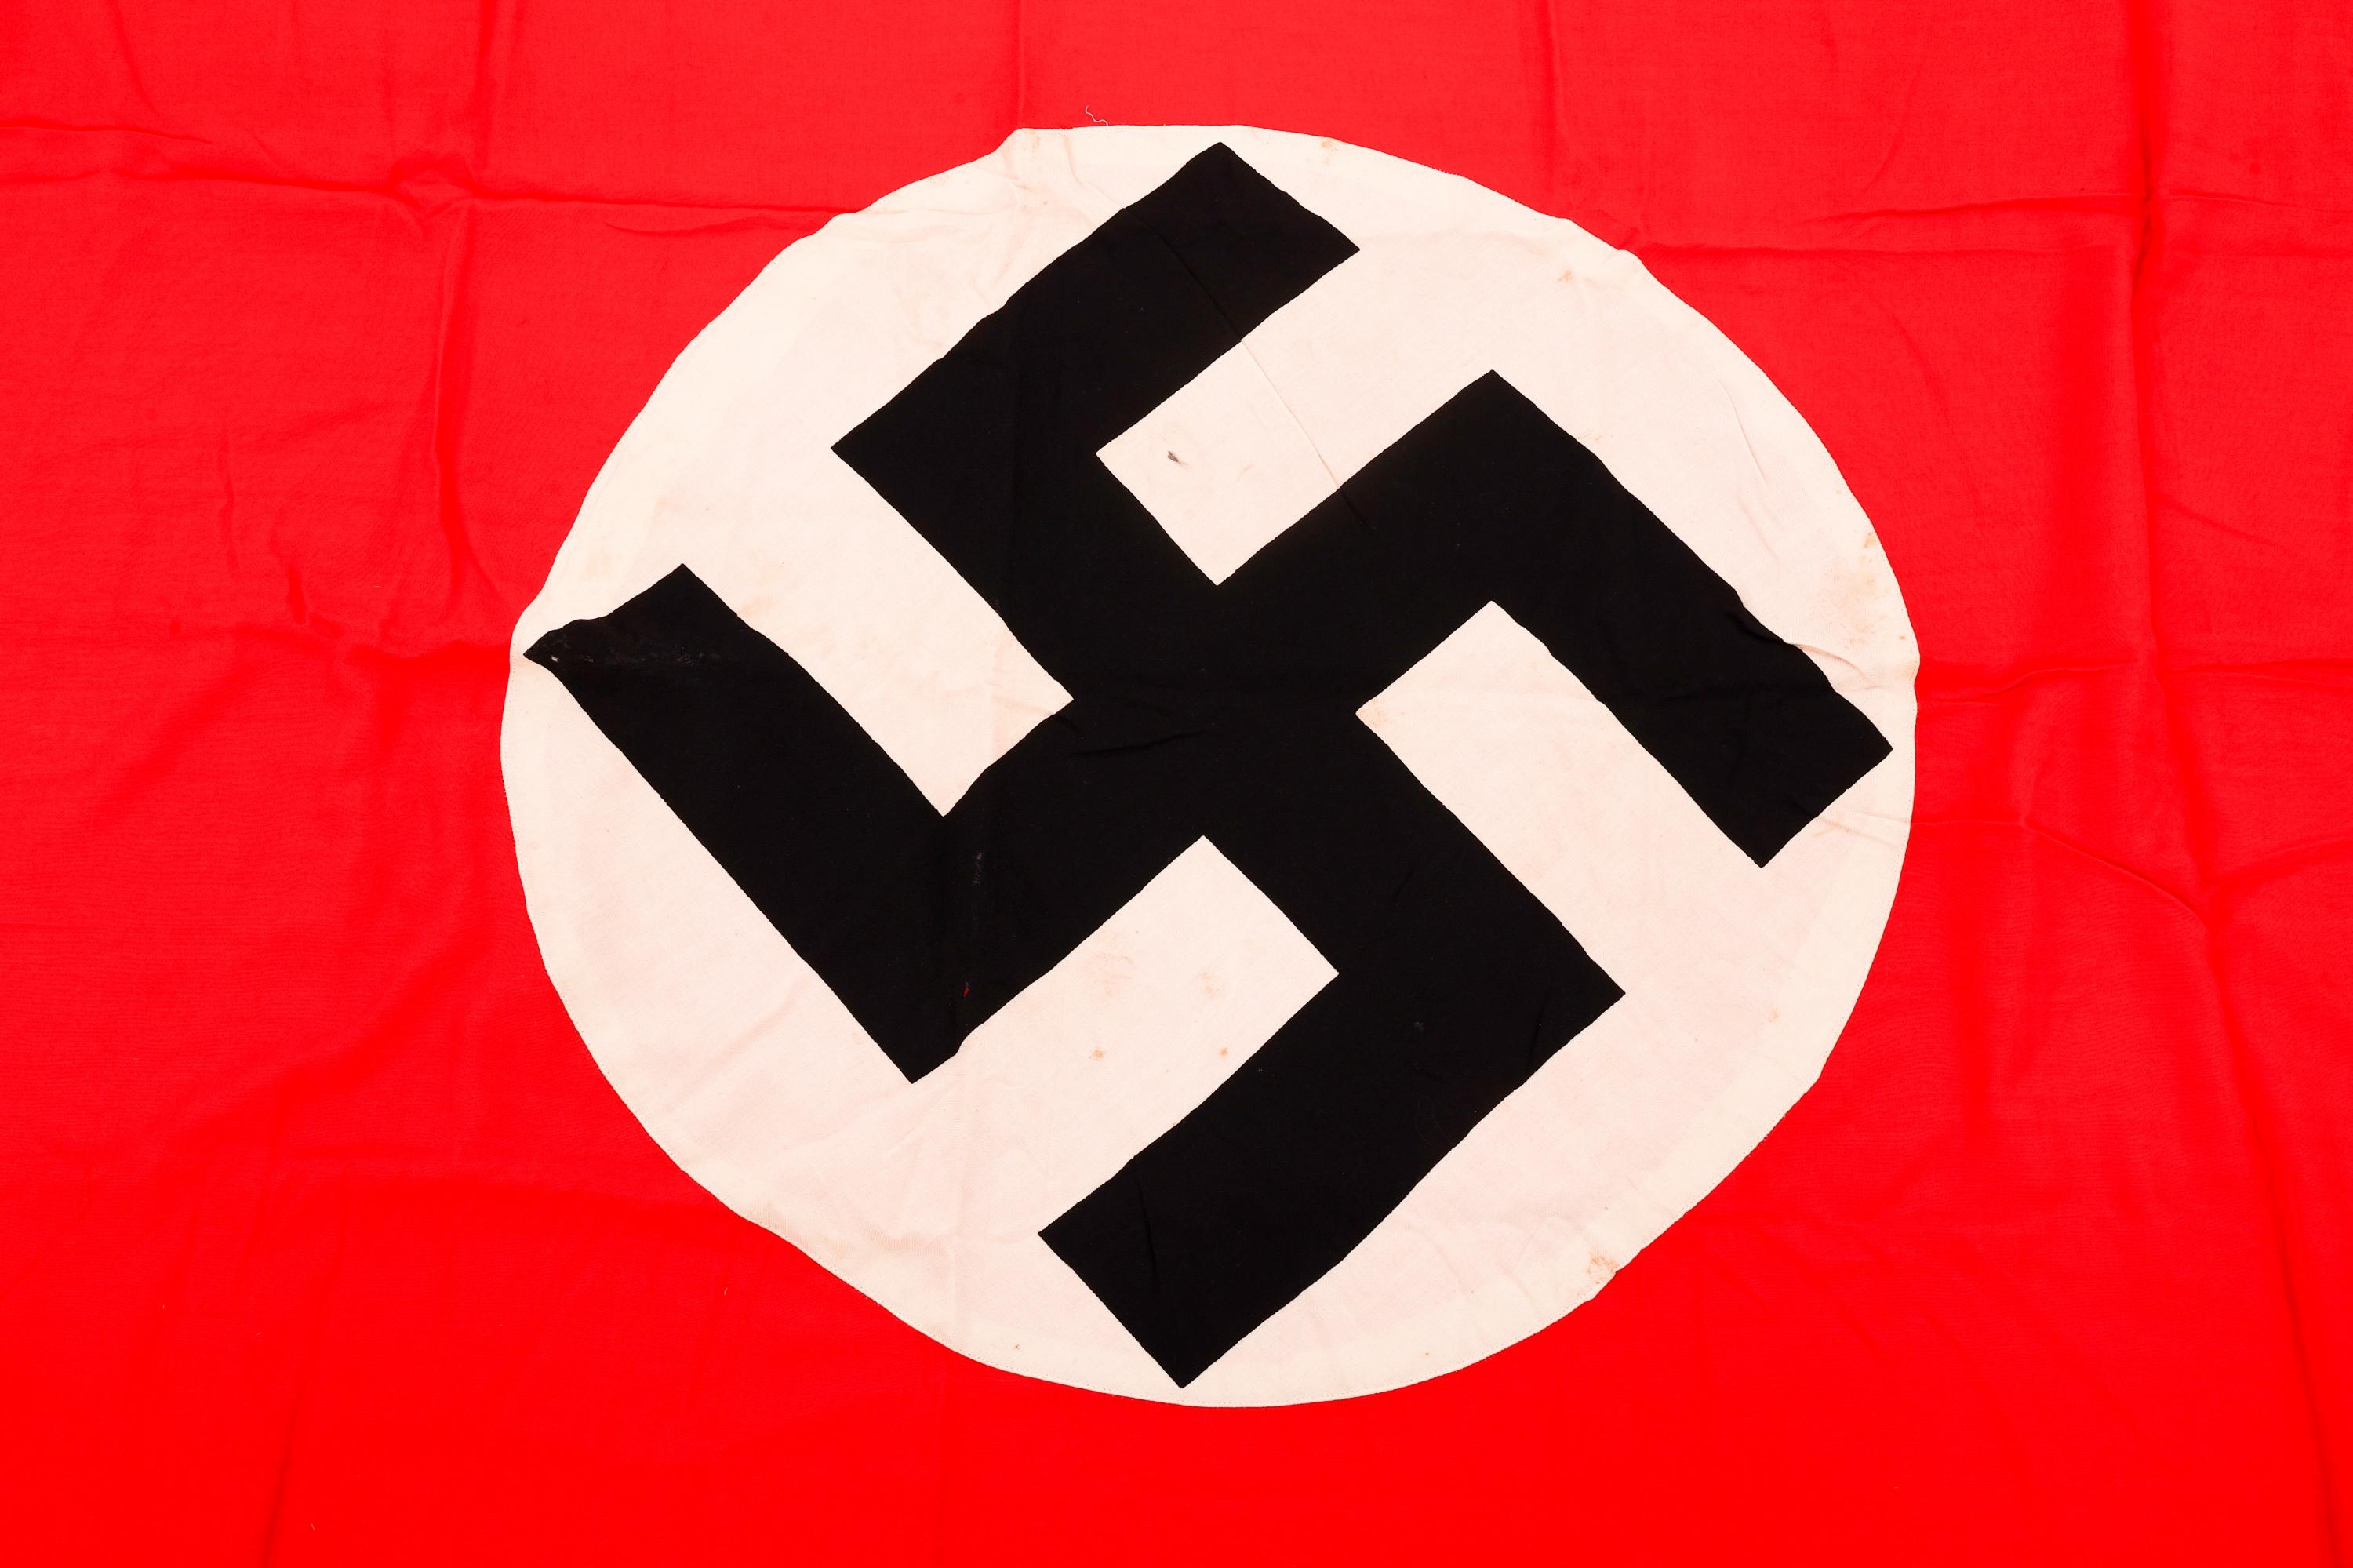 WWII GERMAN NSDAP BANNER